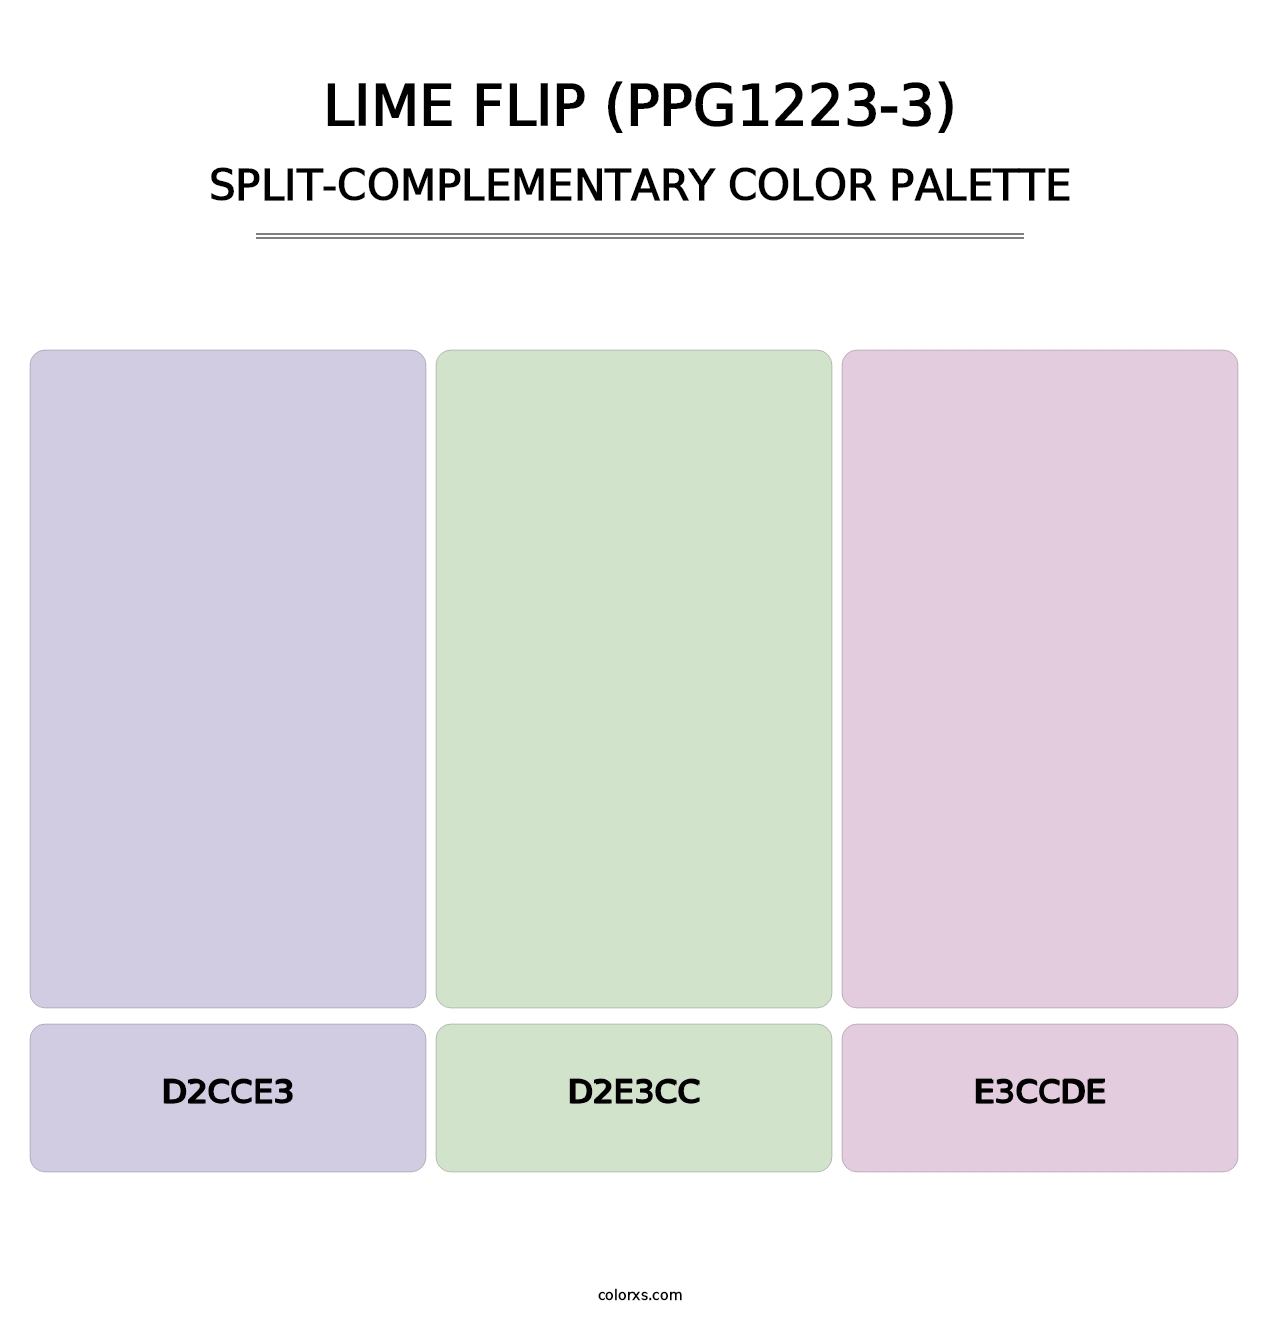 Lime Flip (PPG1223-3) - Split-Complementary Color Palette